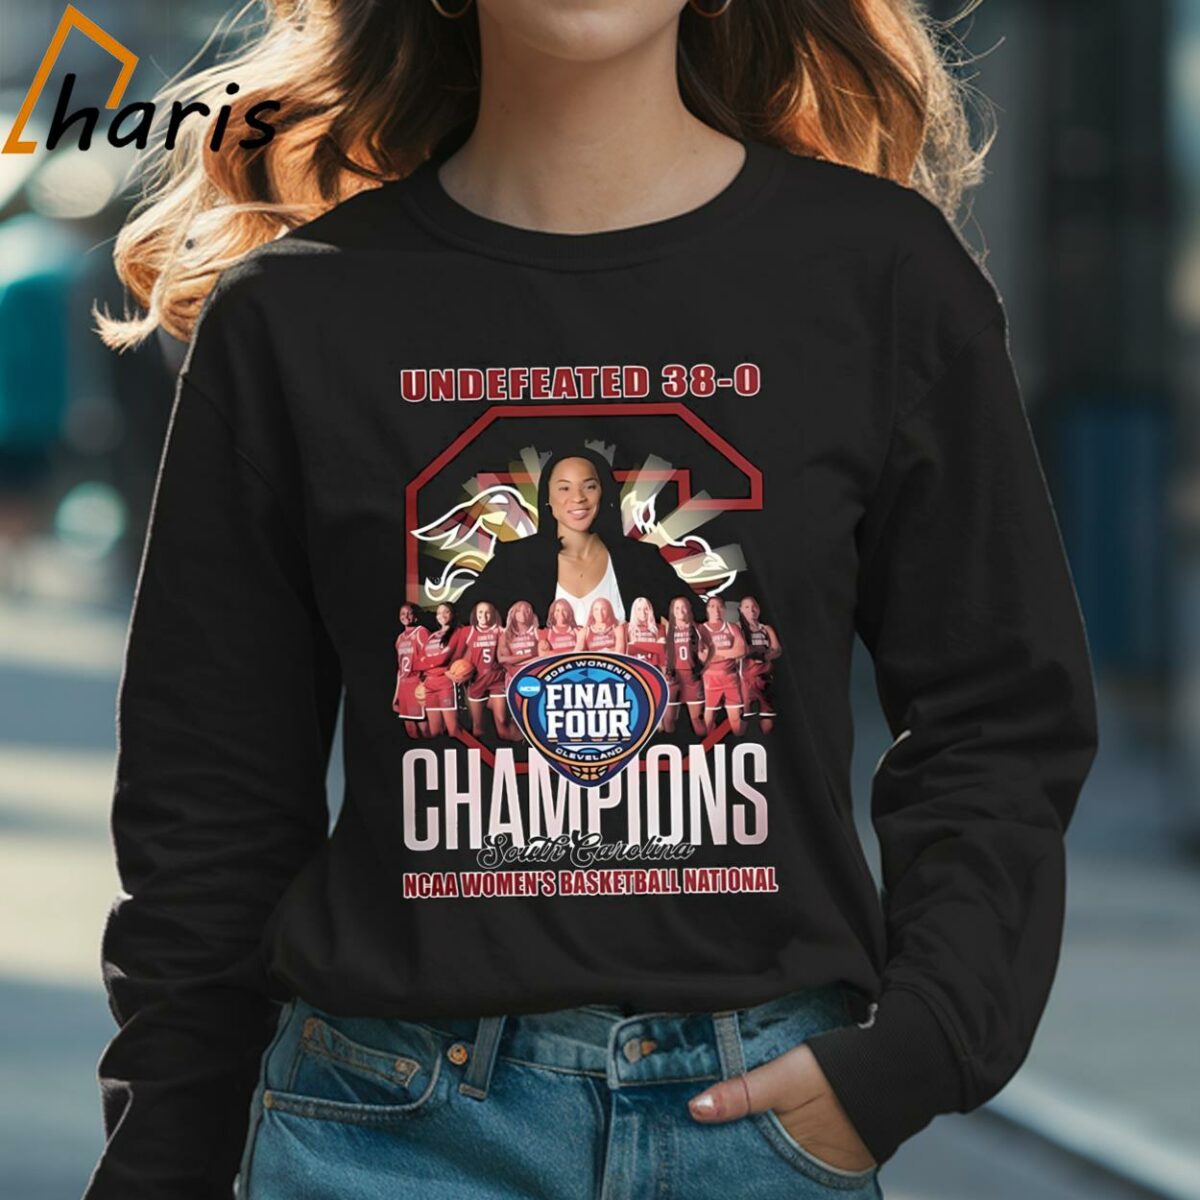 Undefeated 38 0 Champions South Carolina NCAA Womens Basketball National T shirt 3 Long sleeve shirt